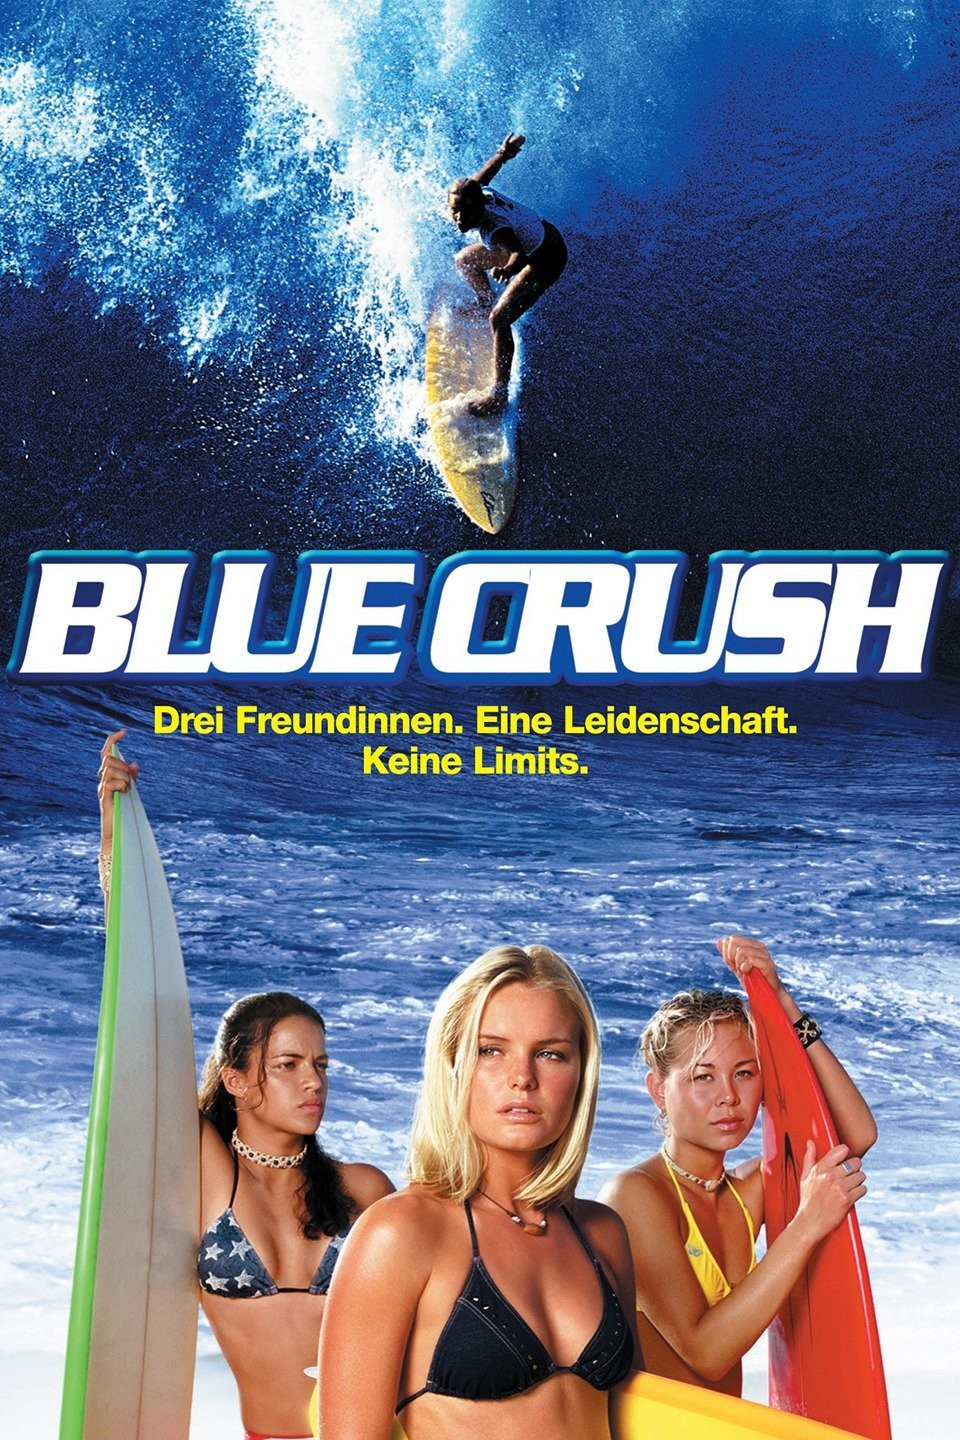 Blue Crush | Rotten Tomatoes